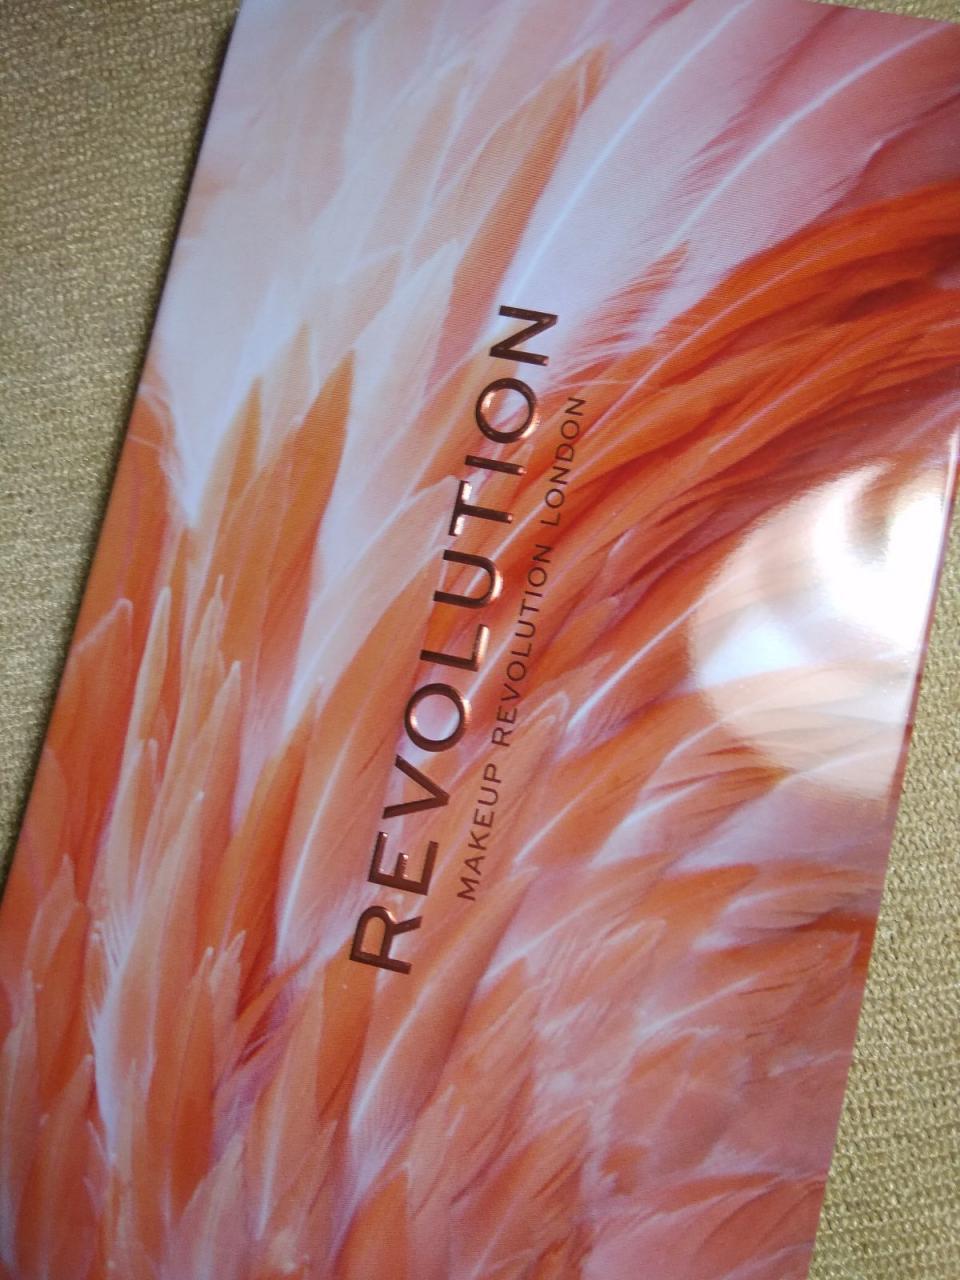 Отзыв на товар: Палетка теней для век Forever Flawless Flamboyance Flamingo Eyeshadow Palette. Makeup Revolution. Вид 1 от 21.10.2022 